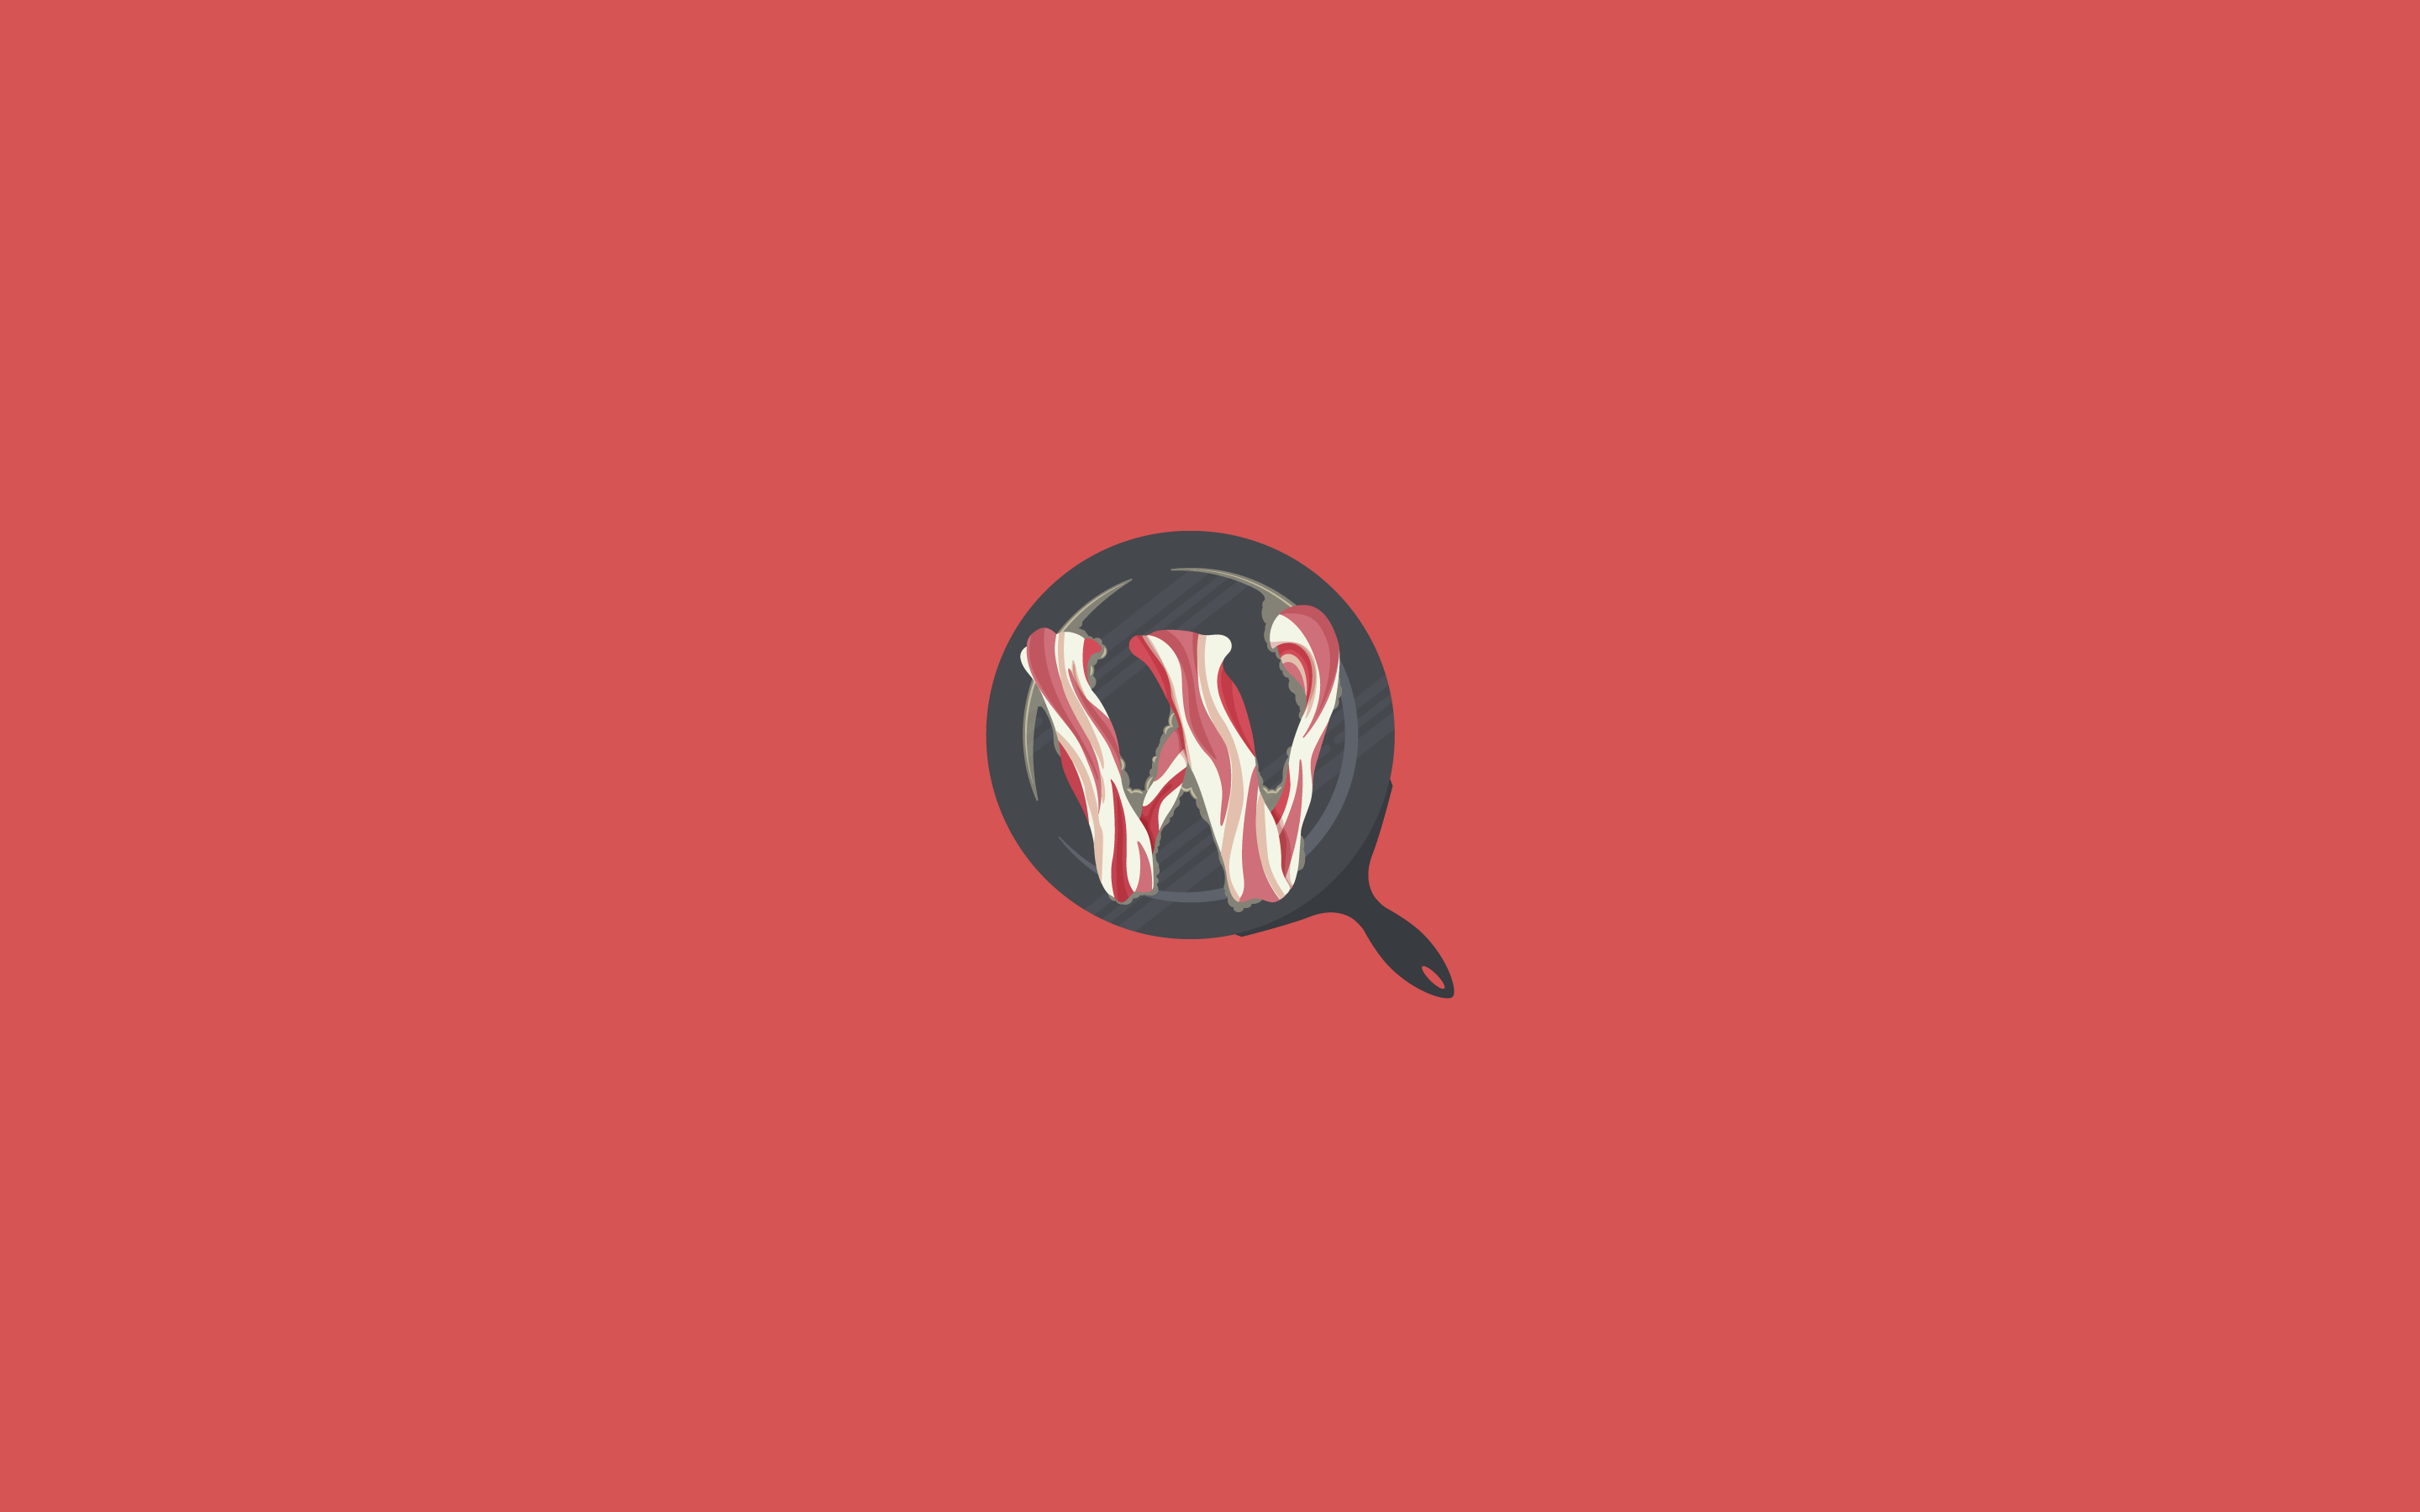 wp wallpaper. wallpaper for the WordPress community